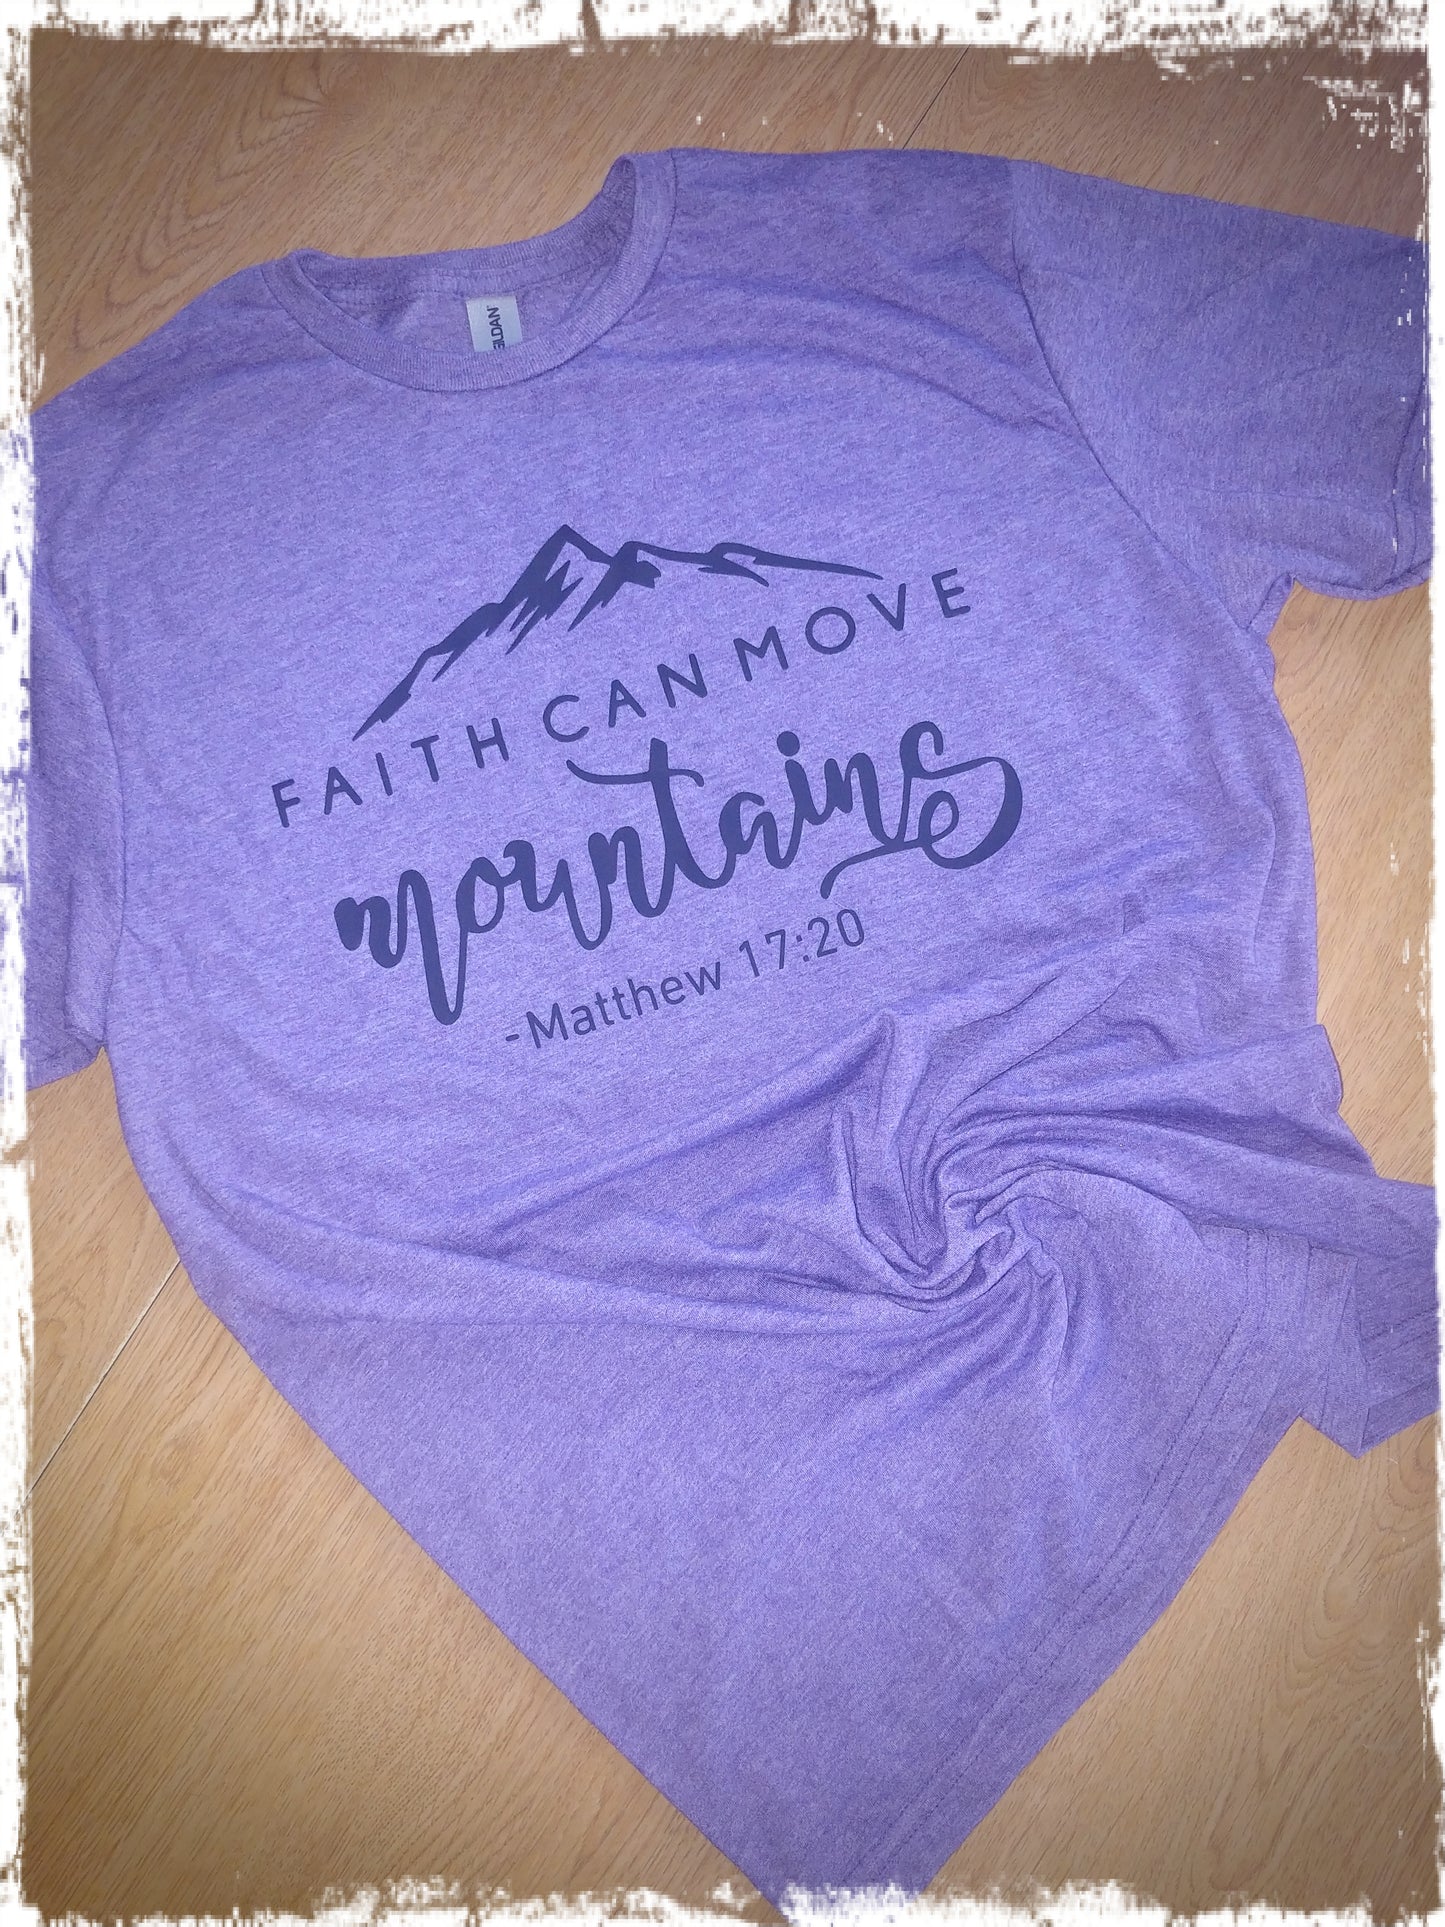 Faith can move Mountains - purple